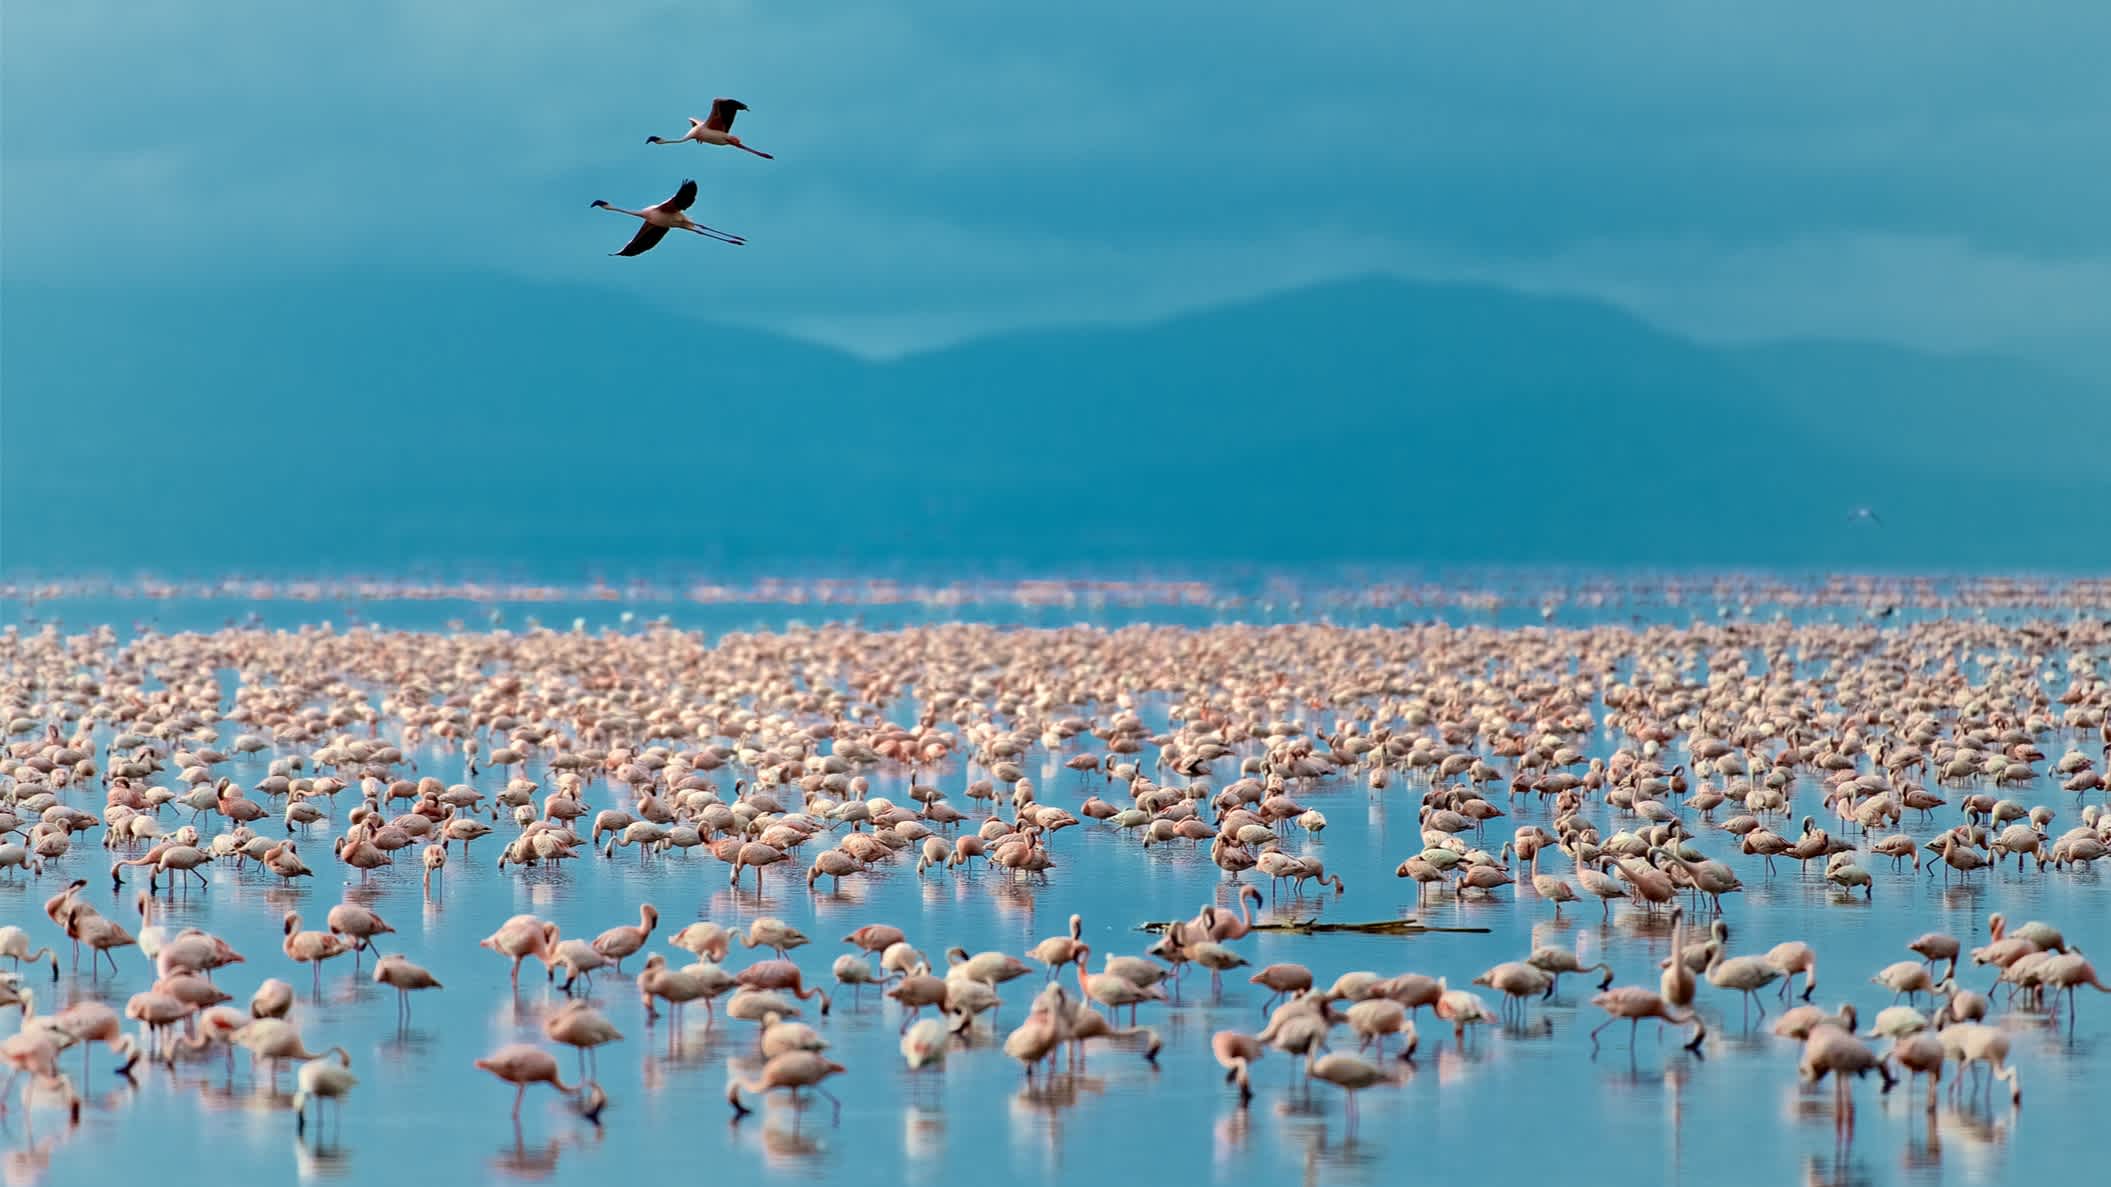 Flamants rose volant au-dessus du lac Manyara en Tanzanie